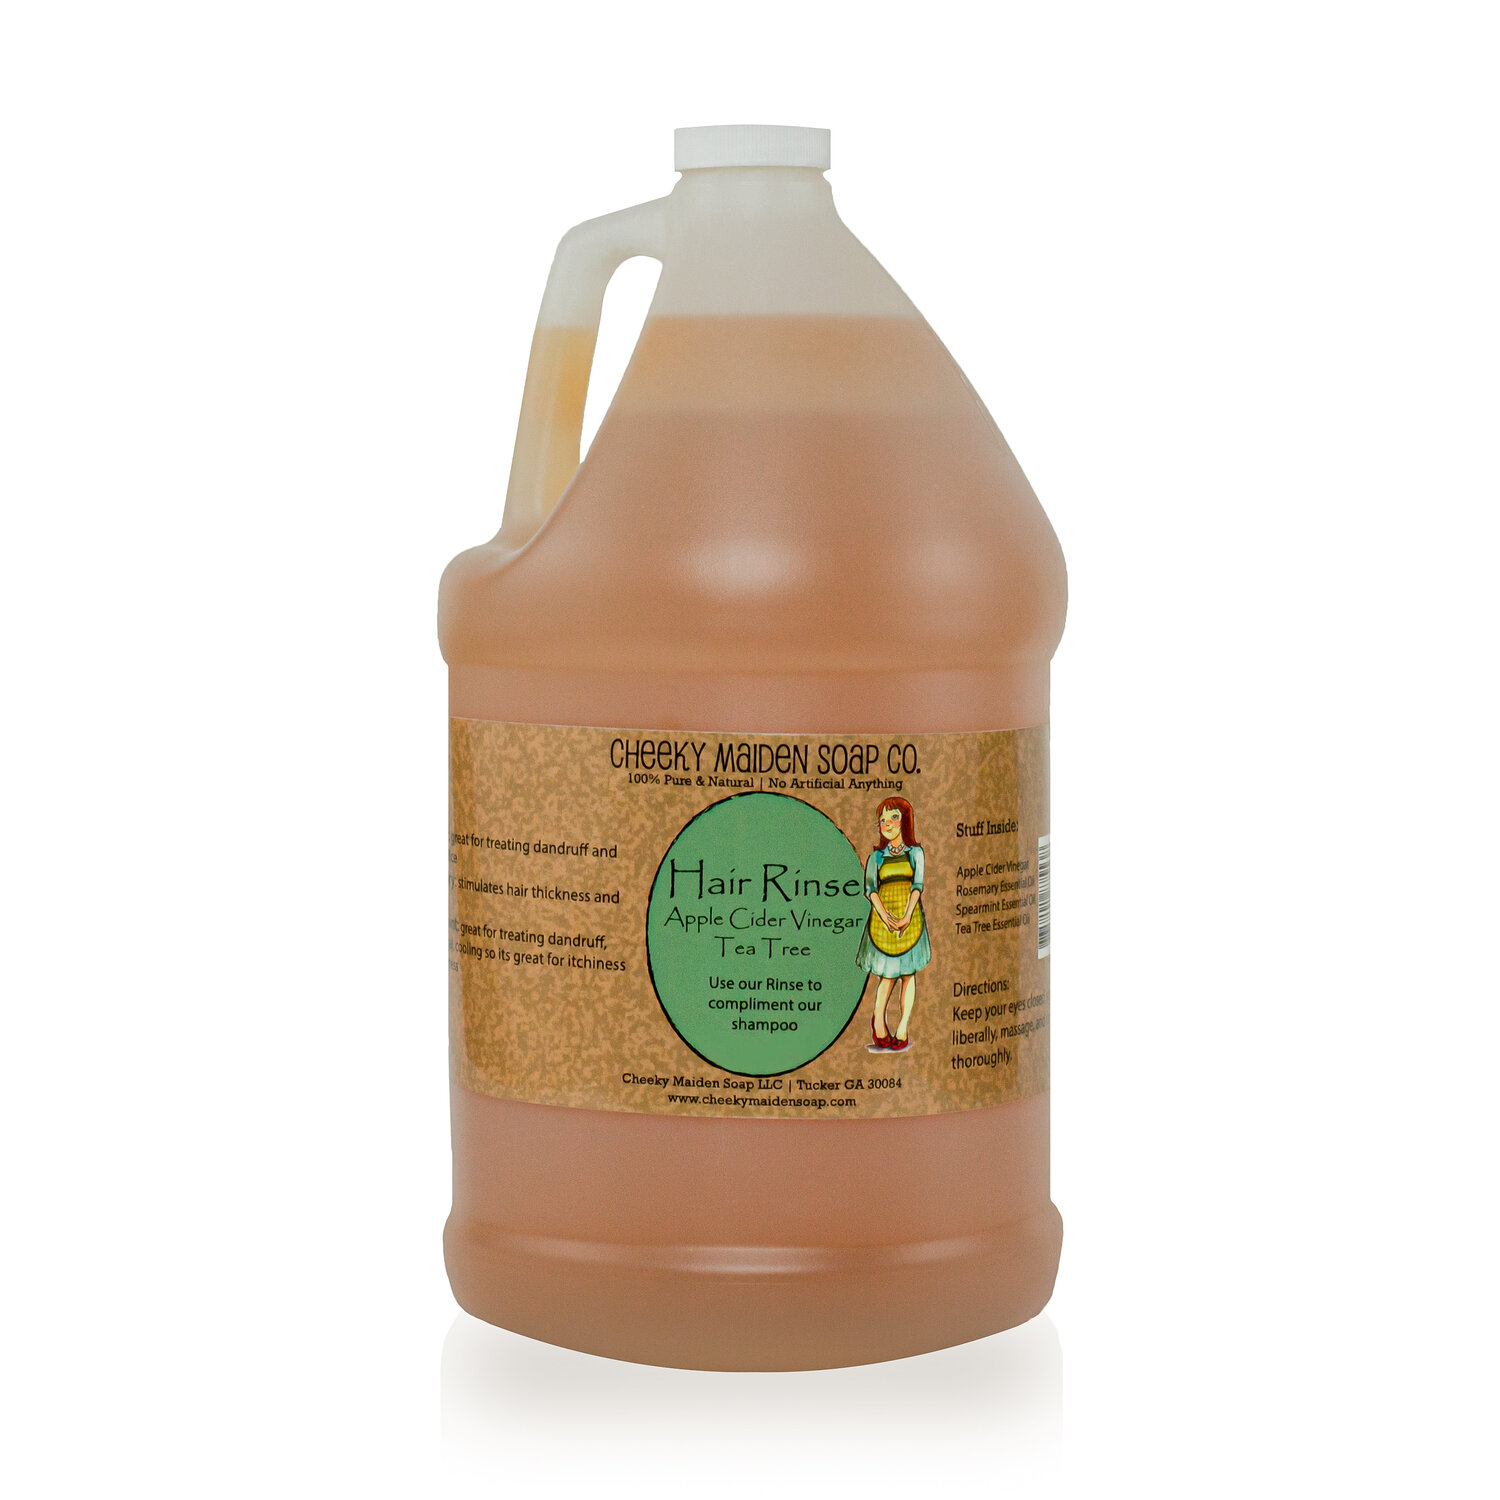 Hair Rinse: Tea Tree Oil: 1 Gallon Jug | Cheeky Maiden Soap